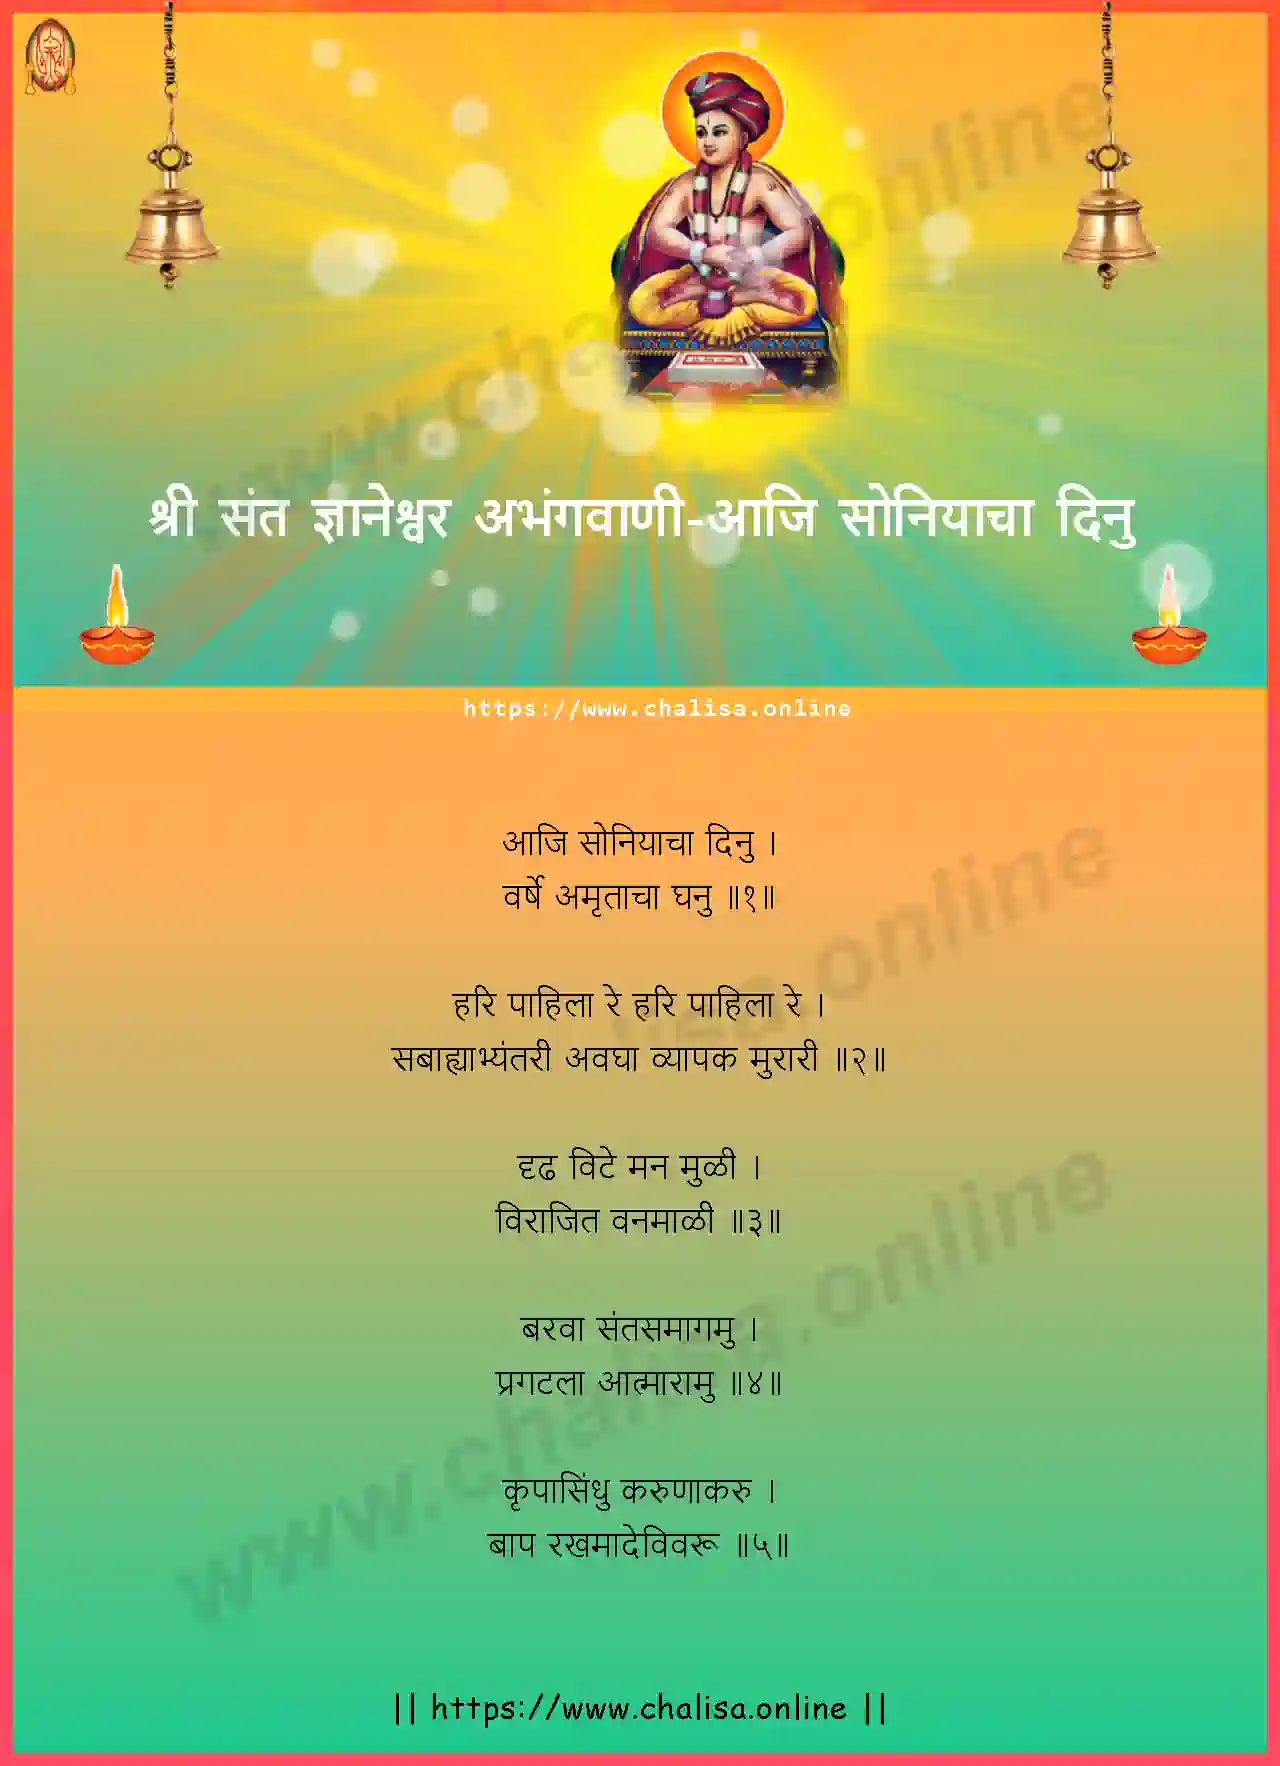 aji-soniyachadinu-shri-sant-dnyaneshwar-abhang-marathi-lyrics-download